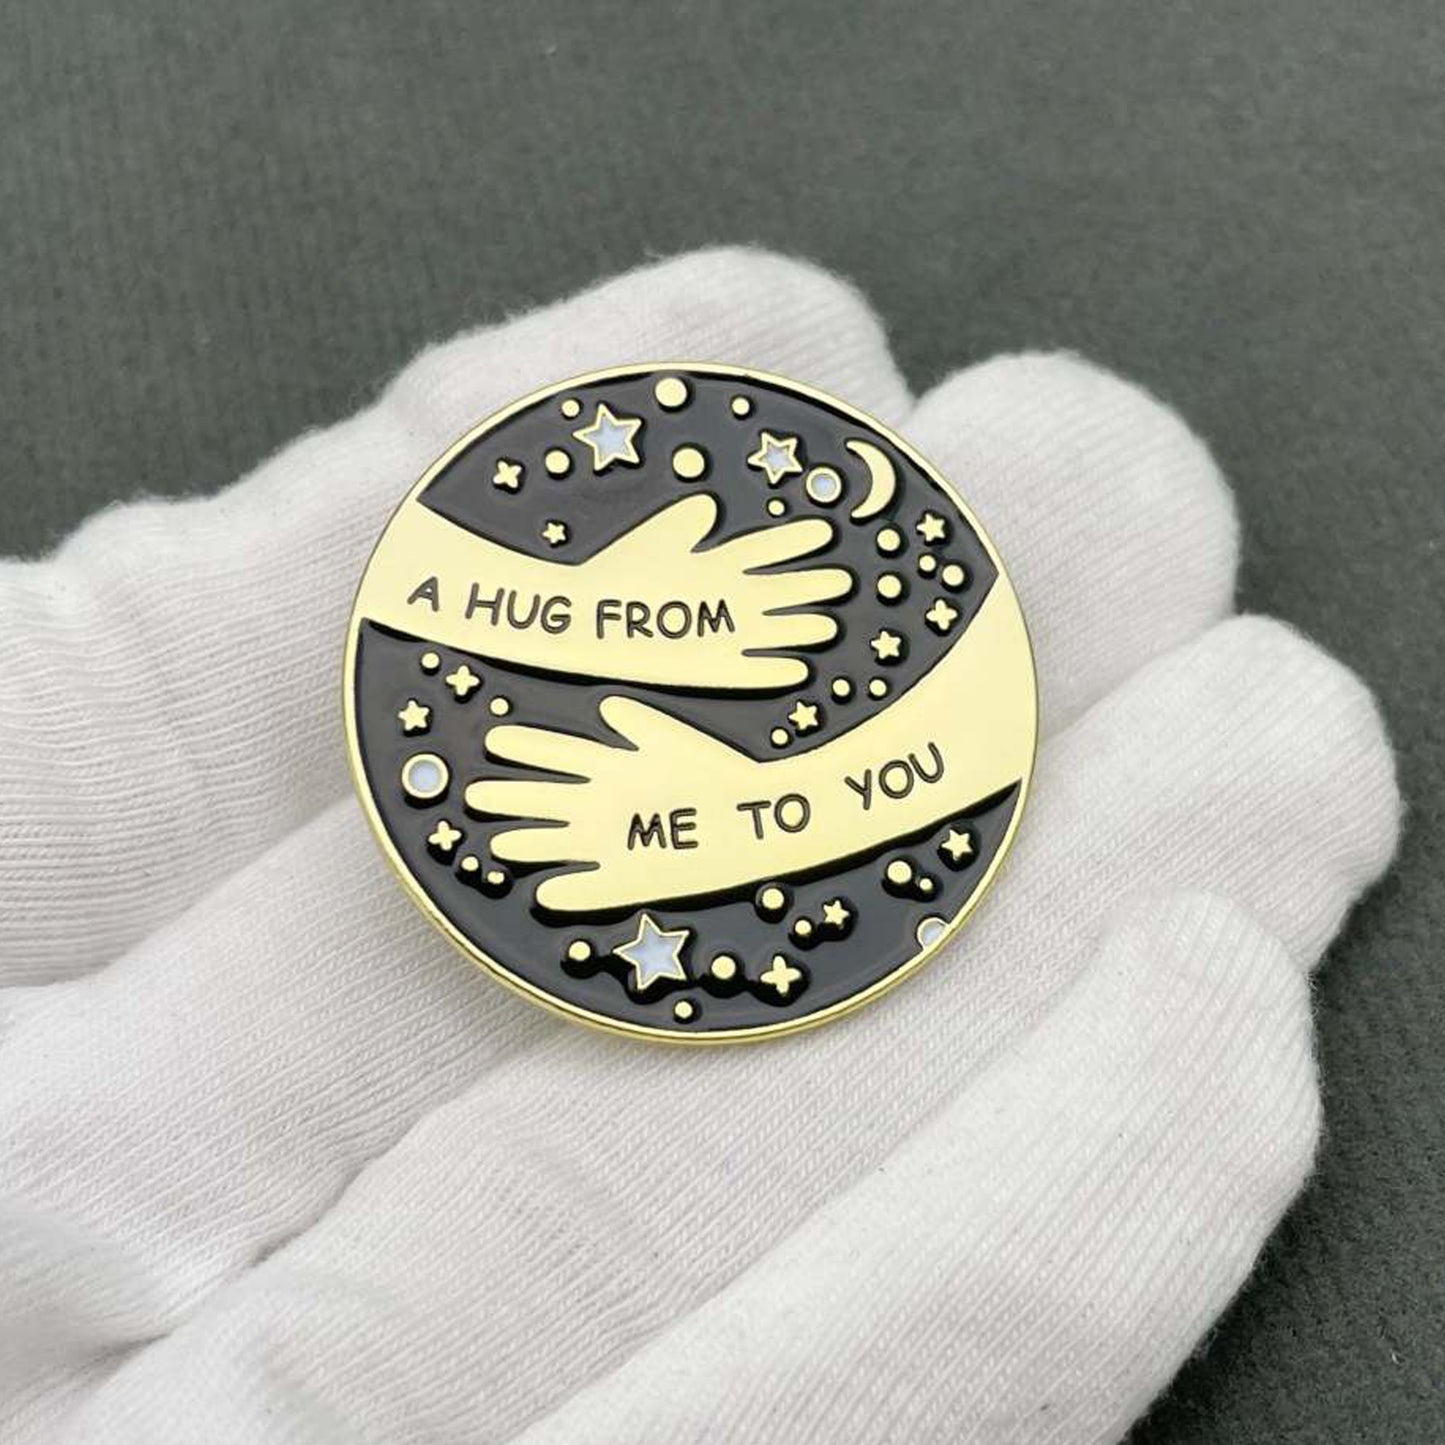 Best Friend Pocket Hug Pin Badges & Personalised Message Cards